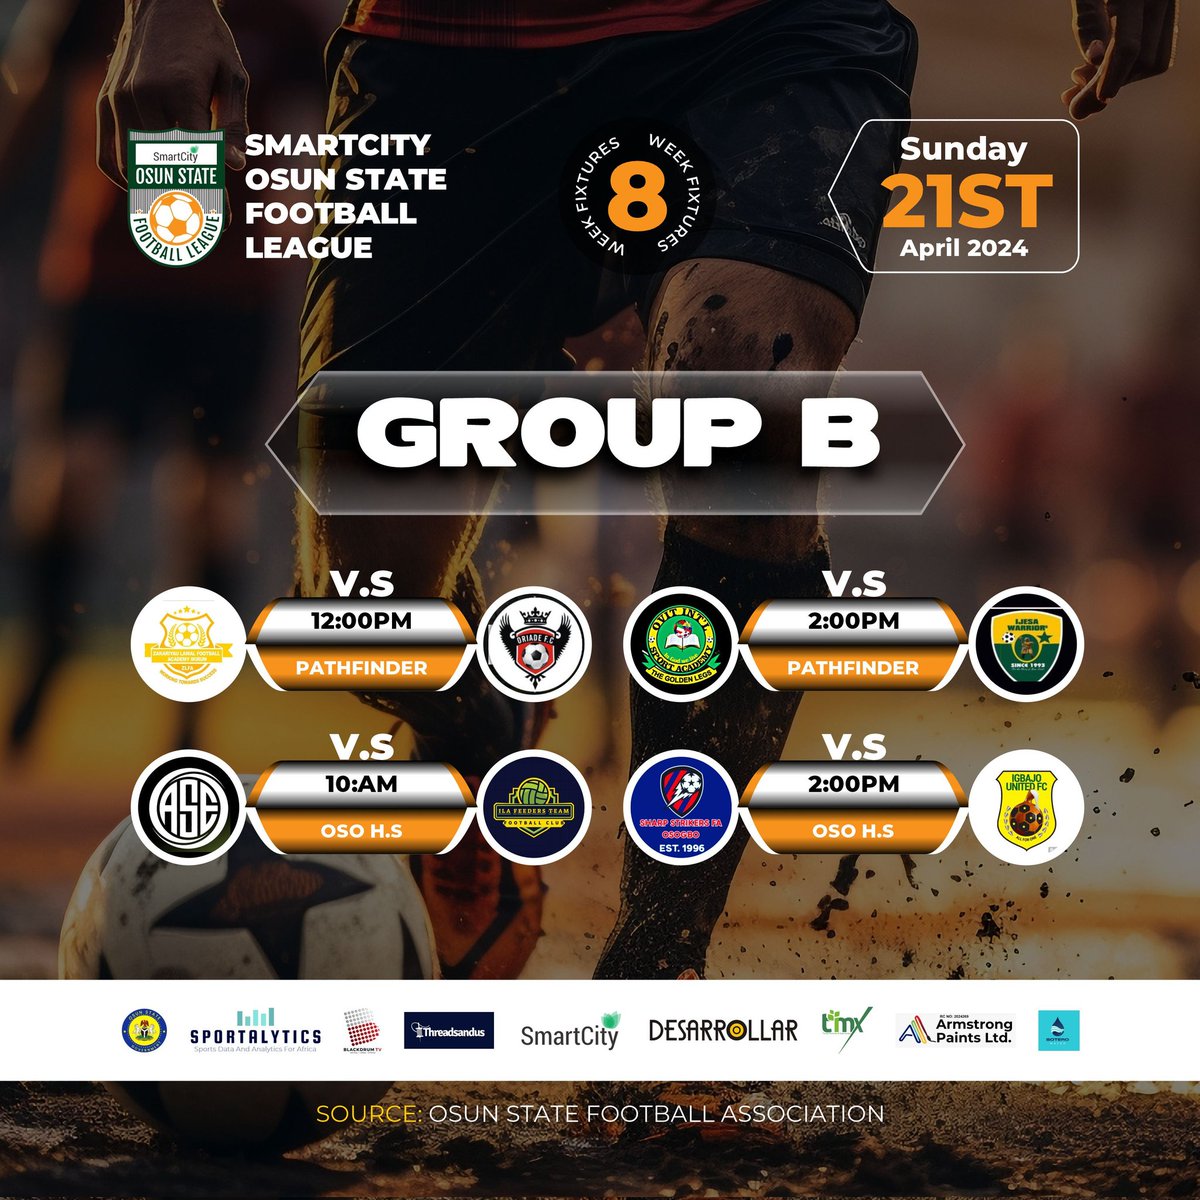 Smartcity Osun State Football League
Week 8 fixtures 
Group B
@GoldenIjes78037 @IgbajoF32230 @OvitSport @OsunFa @SmartCityOSFL